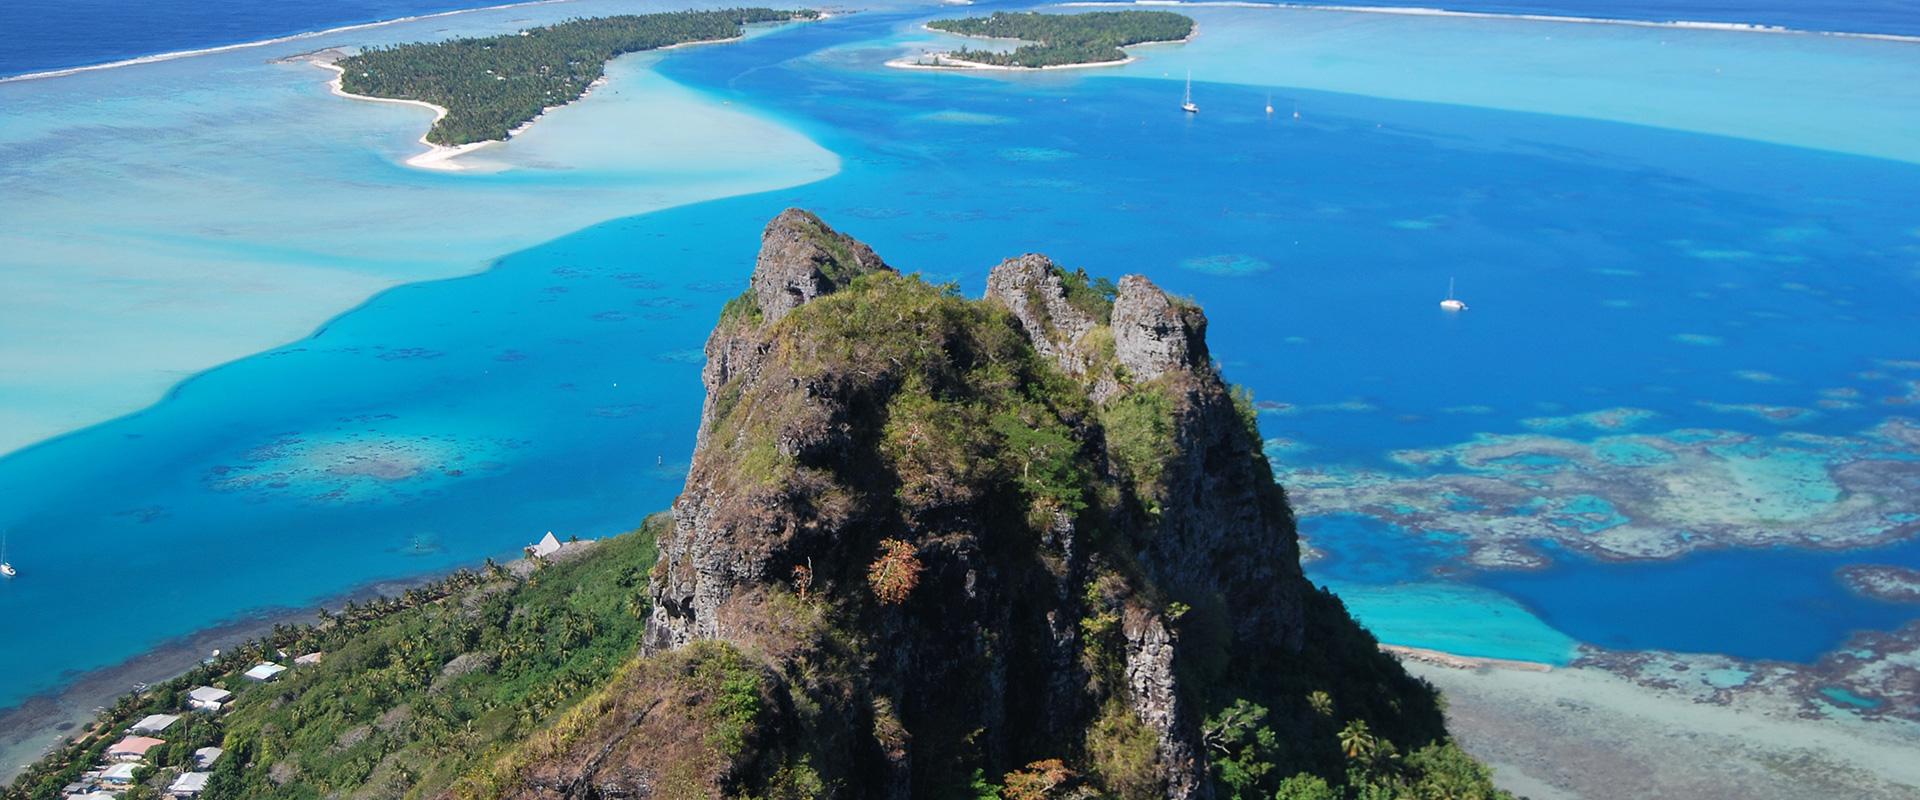 Maupiti Island, French Polynesia